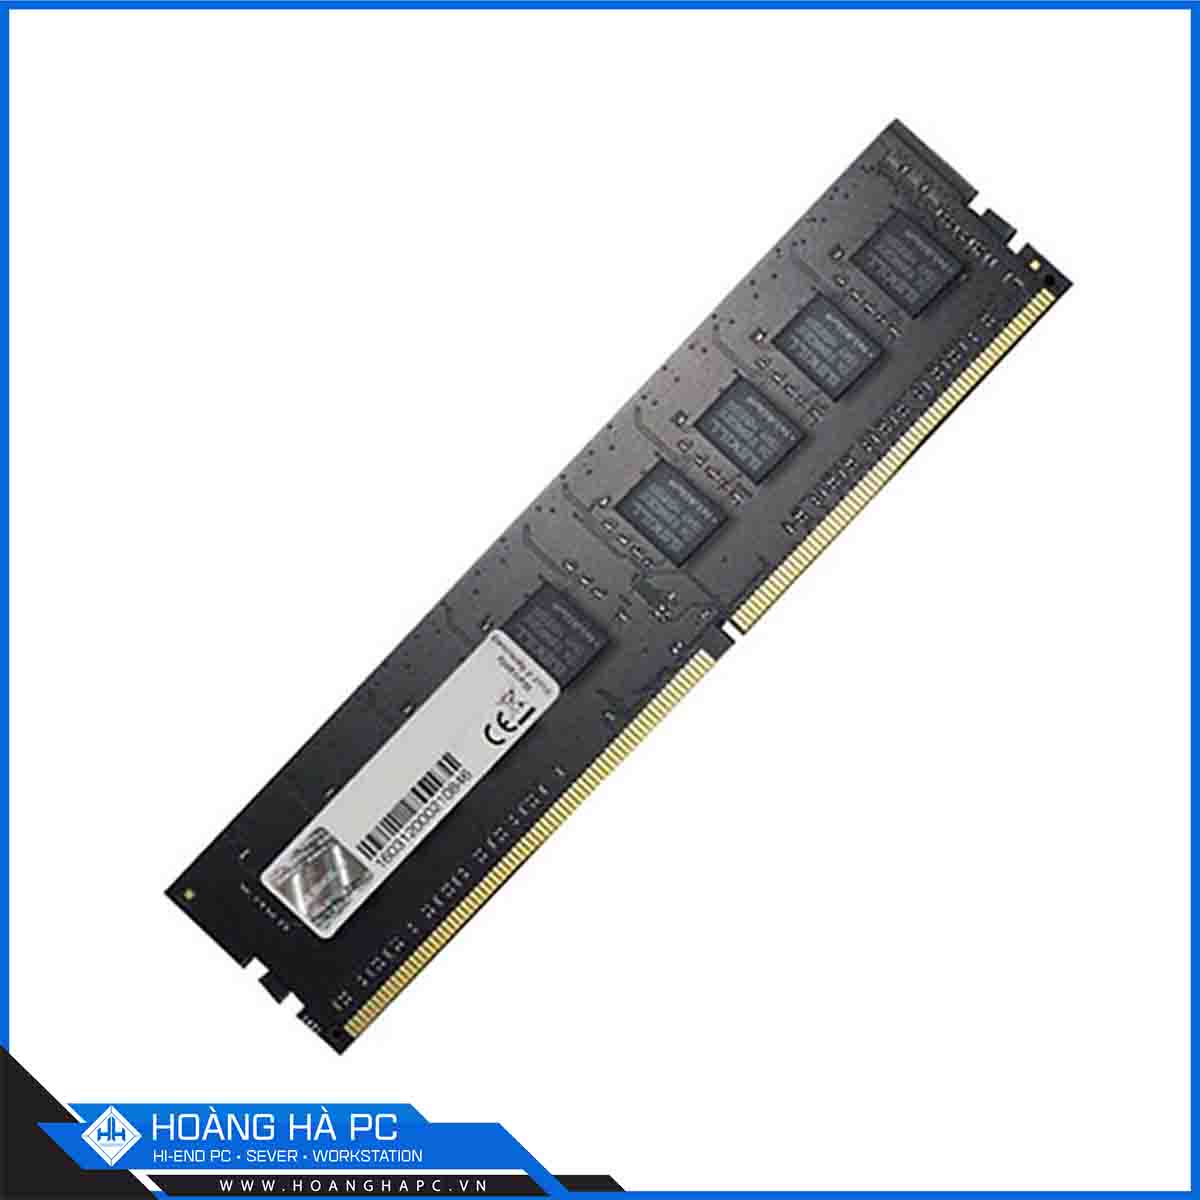 RAM G.SKILL NT 8GB (1x8GB) DDR4 2666MHz (F4-2666C19S-8GNT)